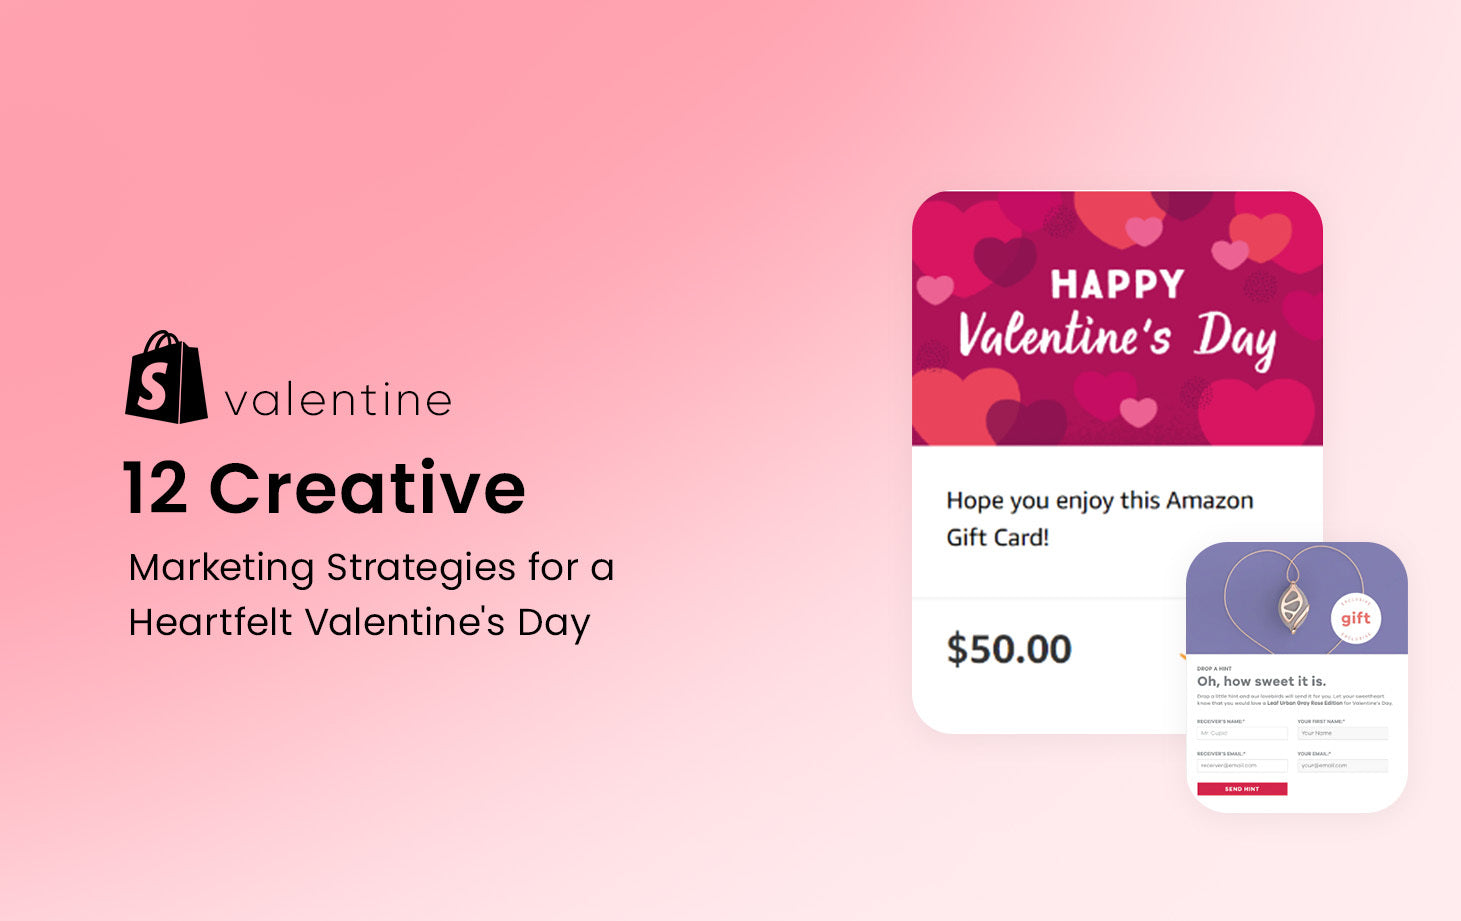 12 Creative Marketing Strategies for a Heartfelt Valentine's Day